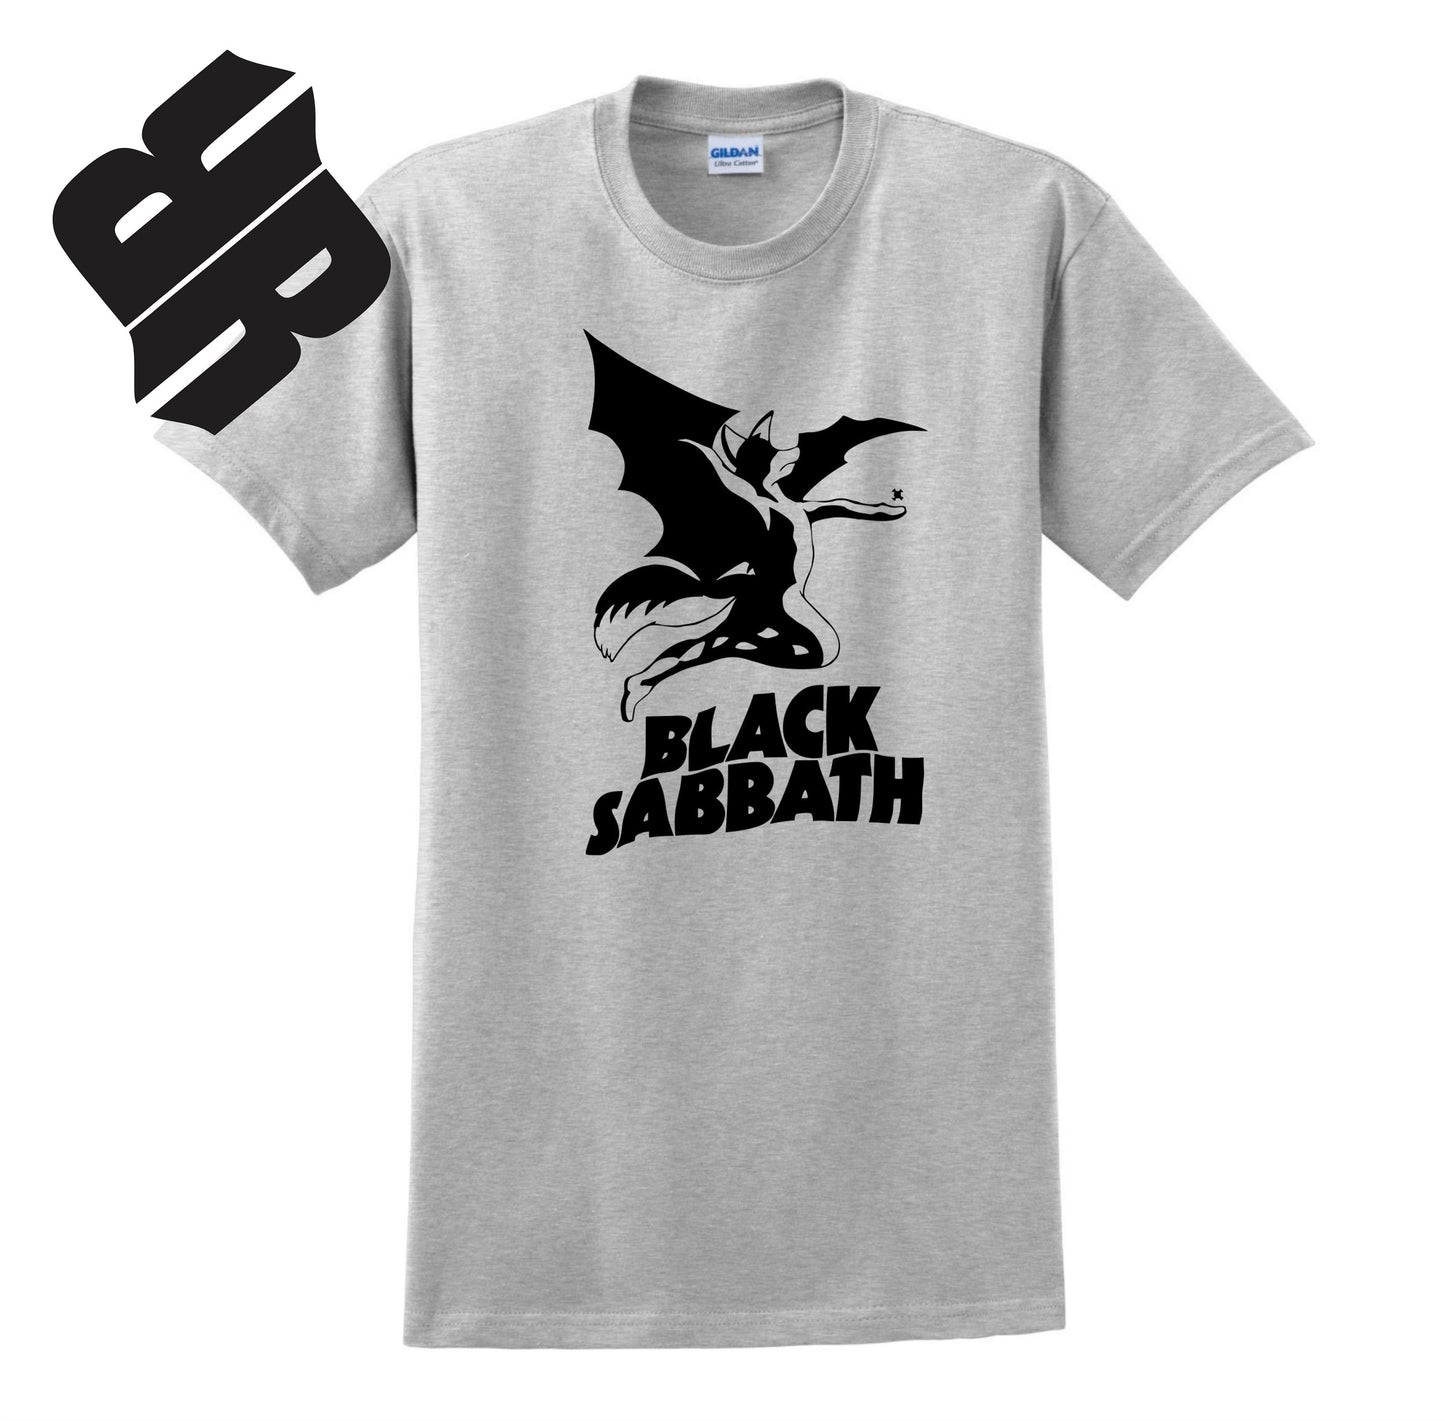 Radical Band  Men's Shirts - Black Sabbath (Gray) - MYSTYLEMYCLOTHING